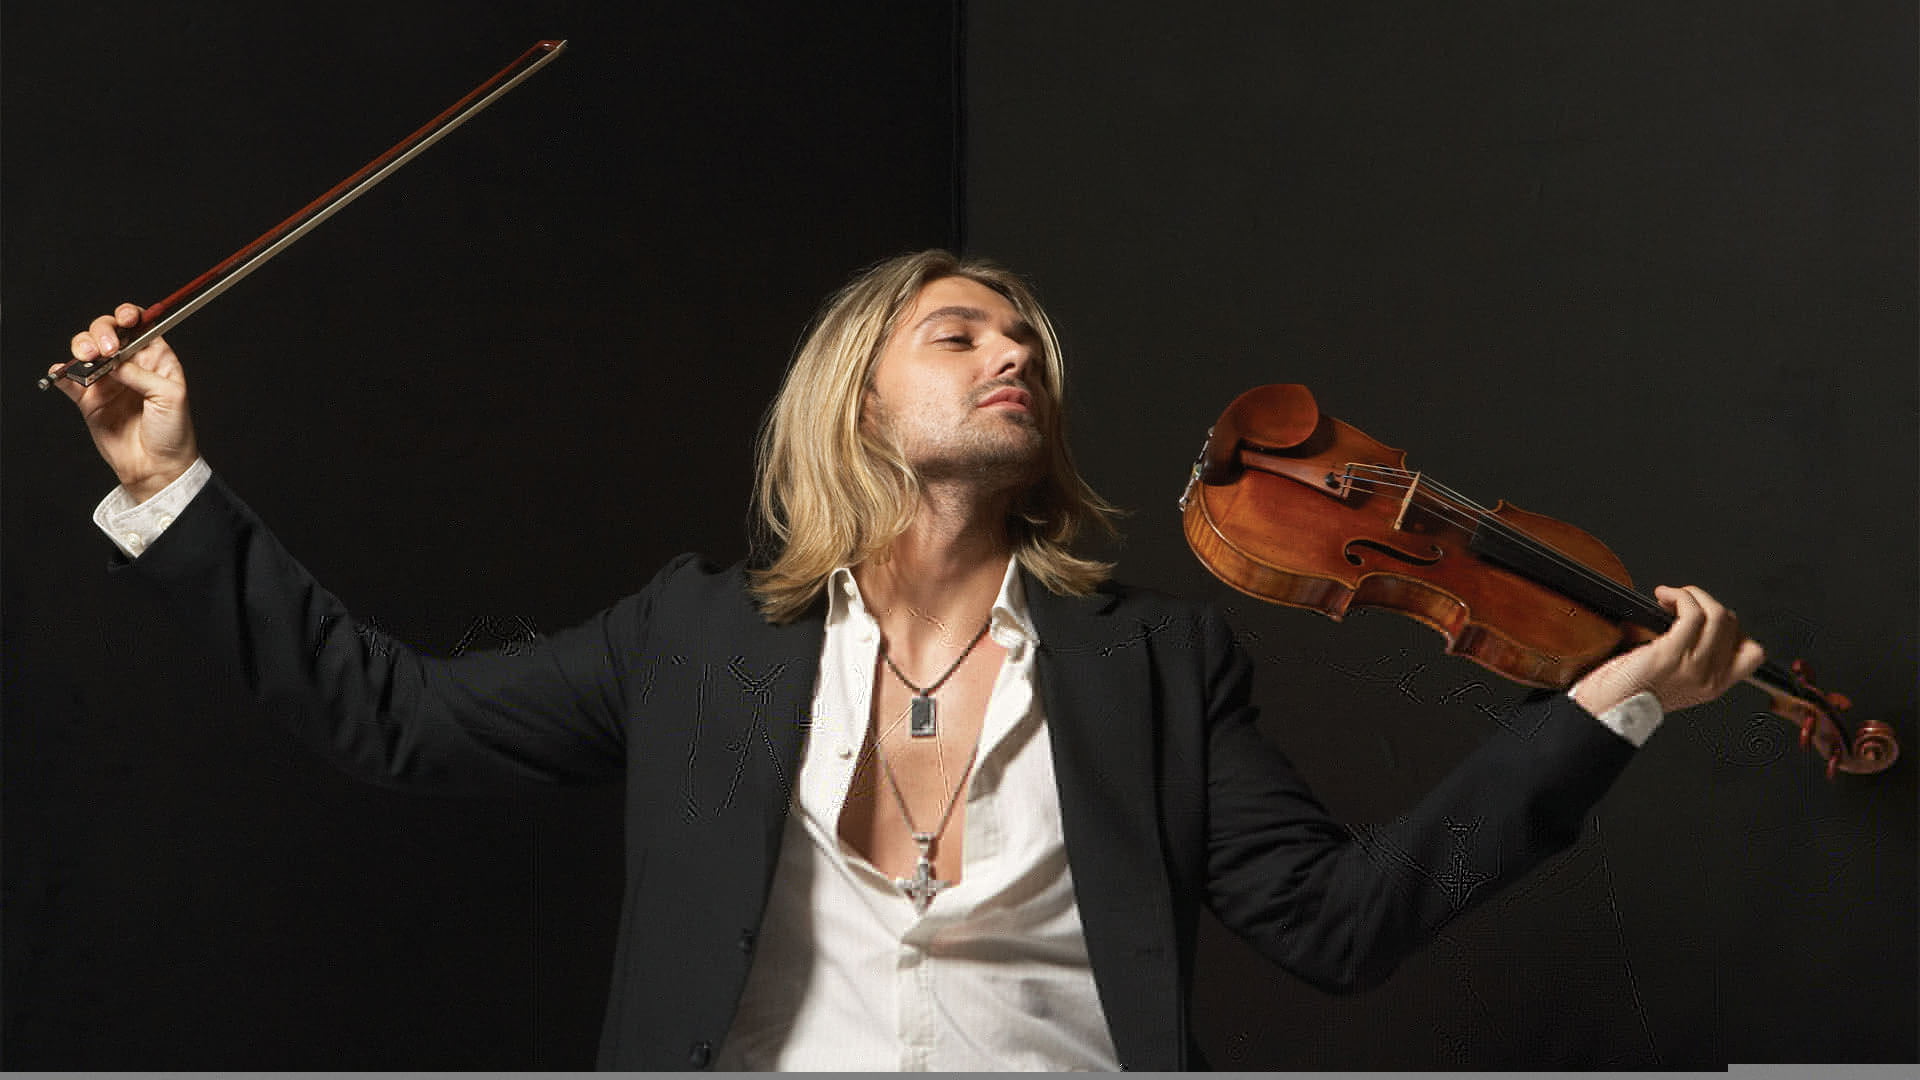 brown violin with bow, jacket, musician, violinist, david garret